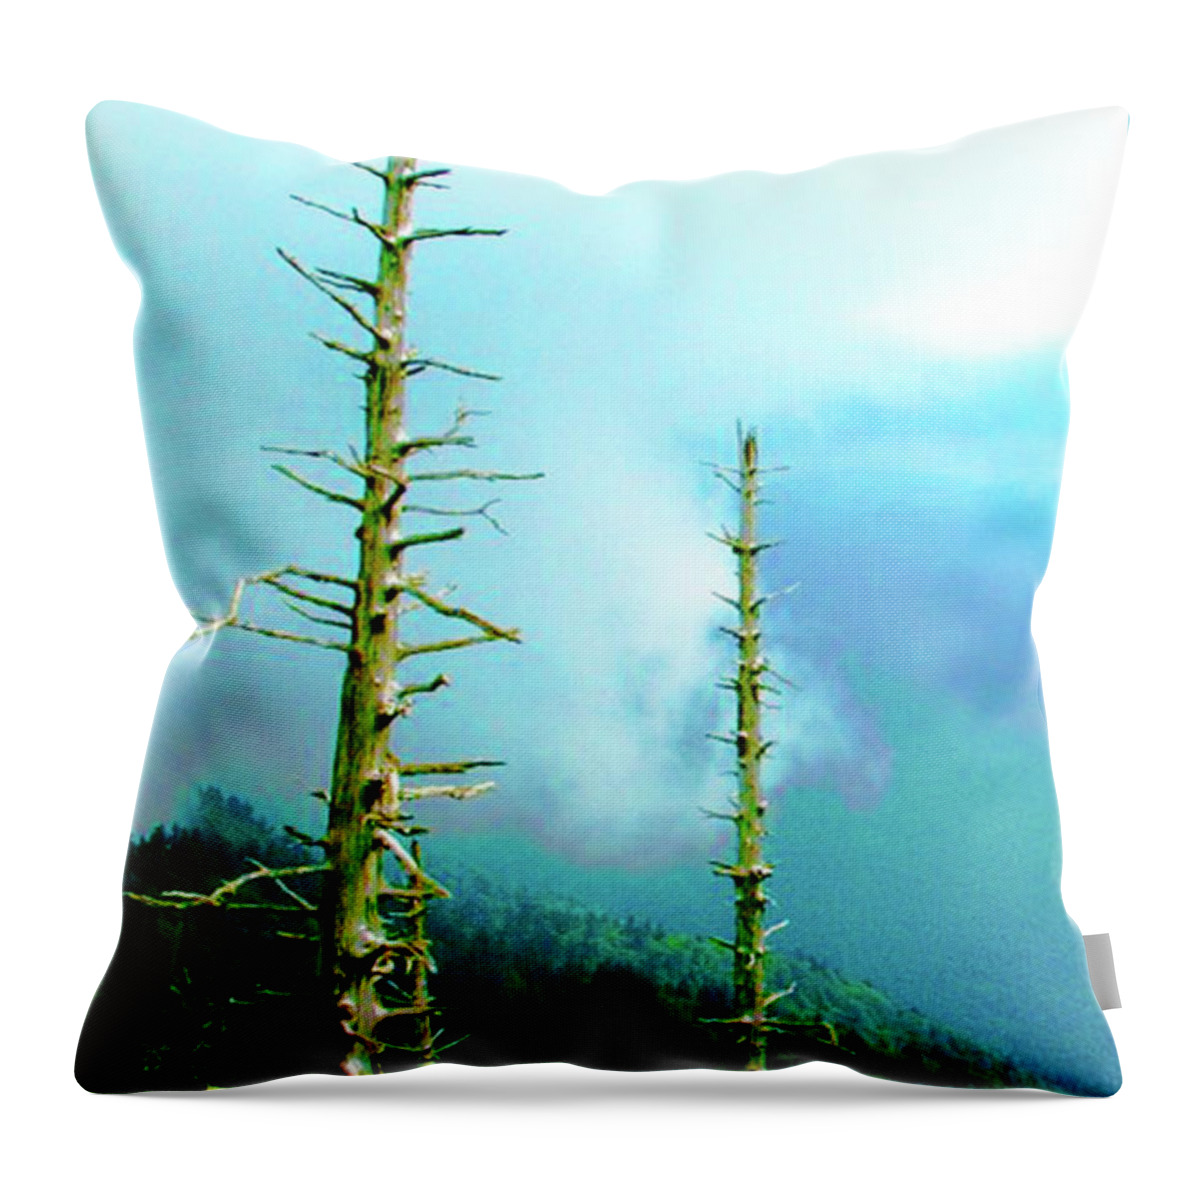 Smokey Mountains Throw Pillow featuring the photograph Pokey Mountain Pines by Rod Whyte